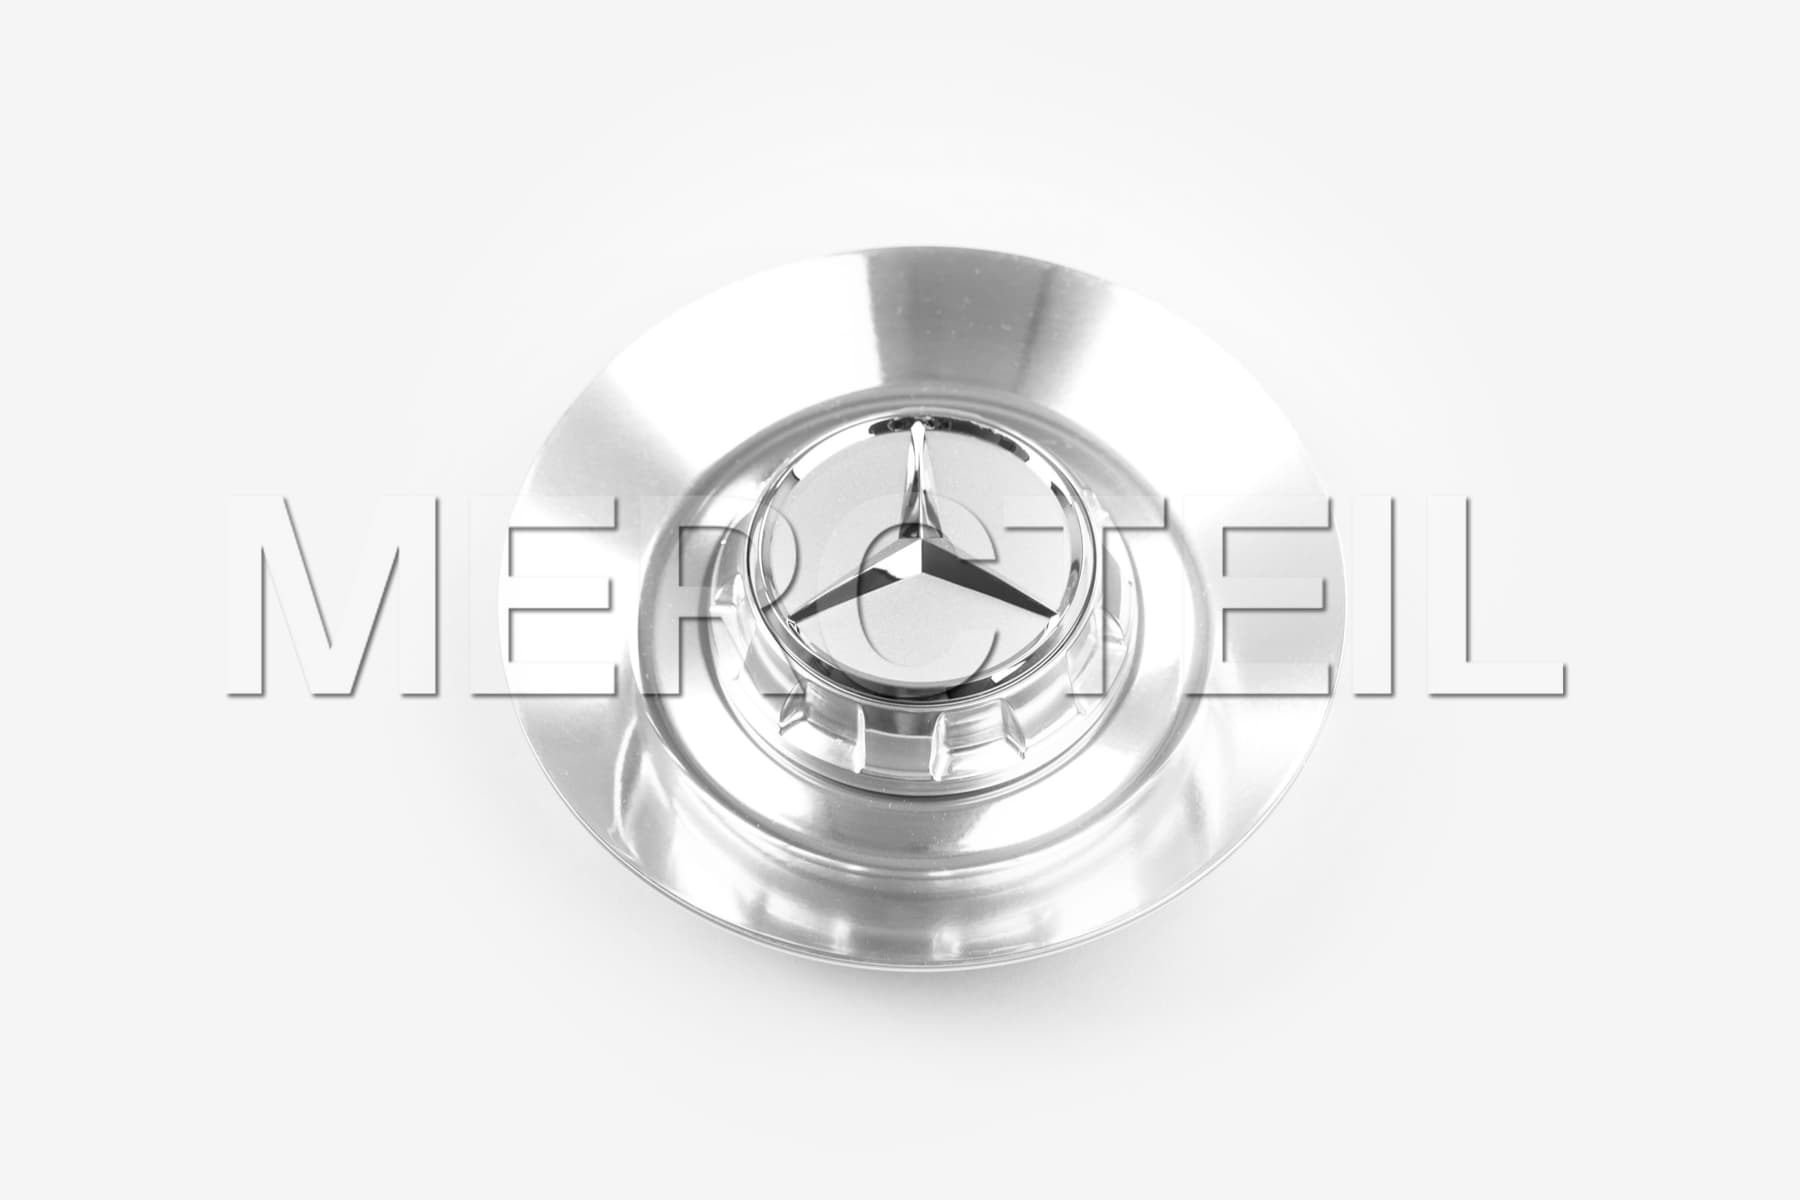 AMG Nabendeckel Satz Silber G-Klasse W463A Original Mercedes AMG (Teilenummer: A00040043007756)